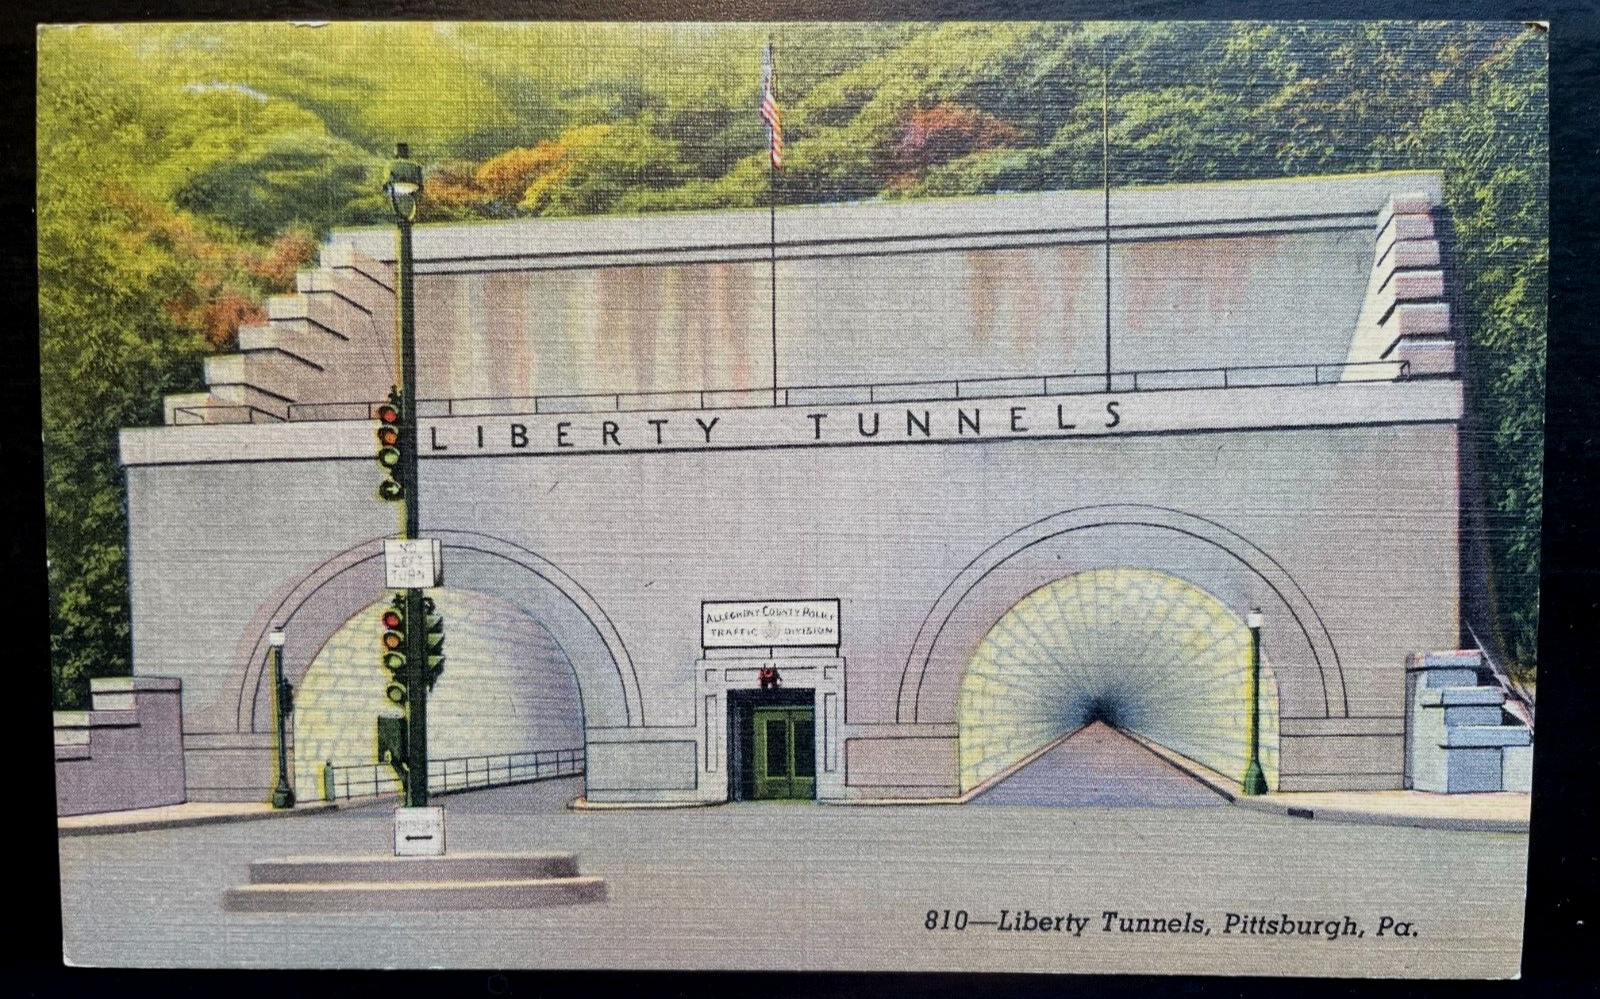 Vintage Postcard 1941 The Liberty Tunnels, PA Turnpike, Pittsburg, PA.